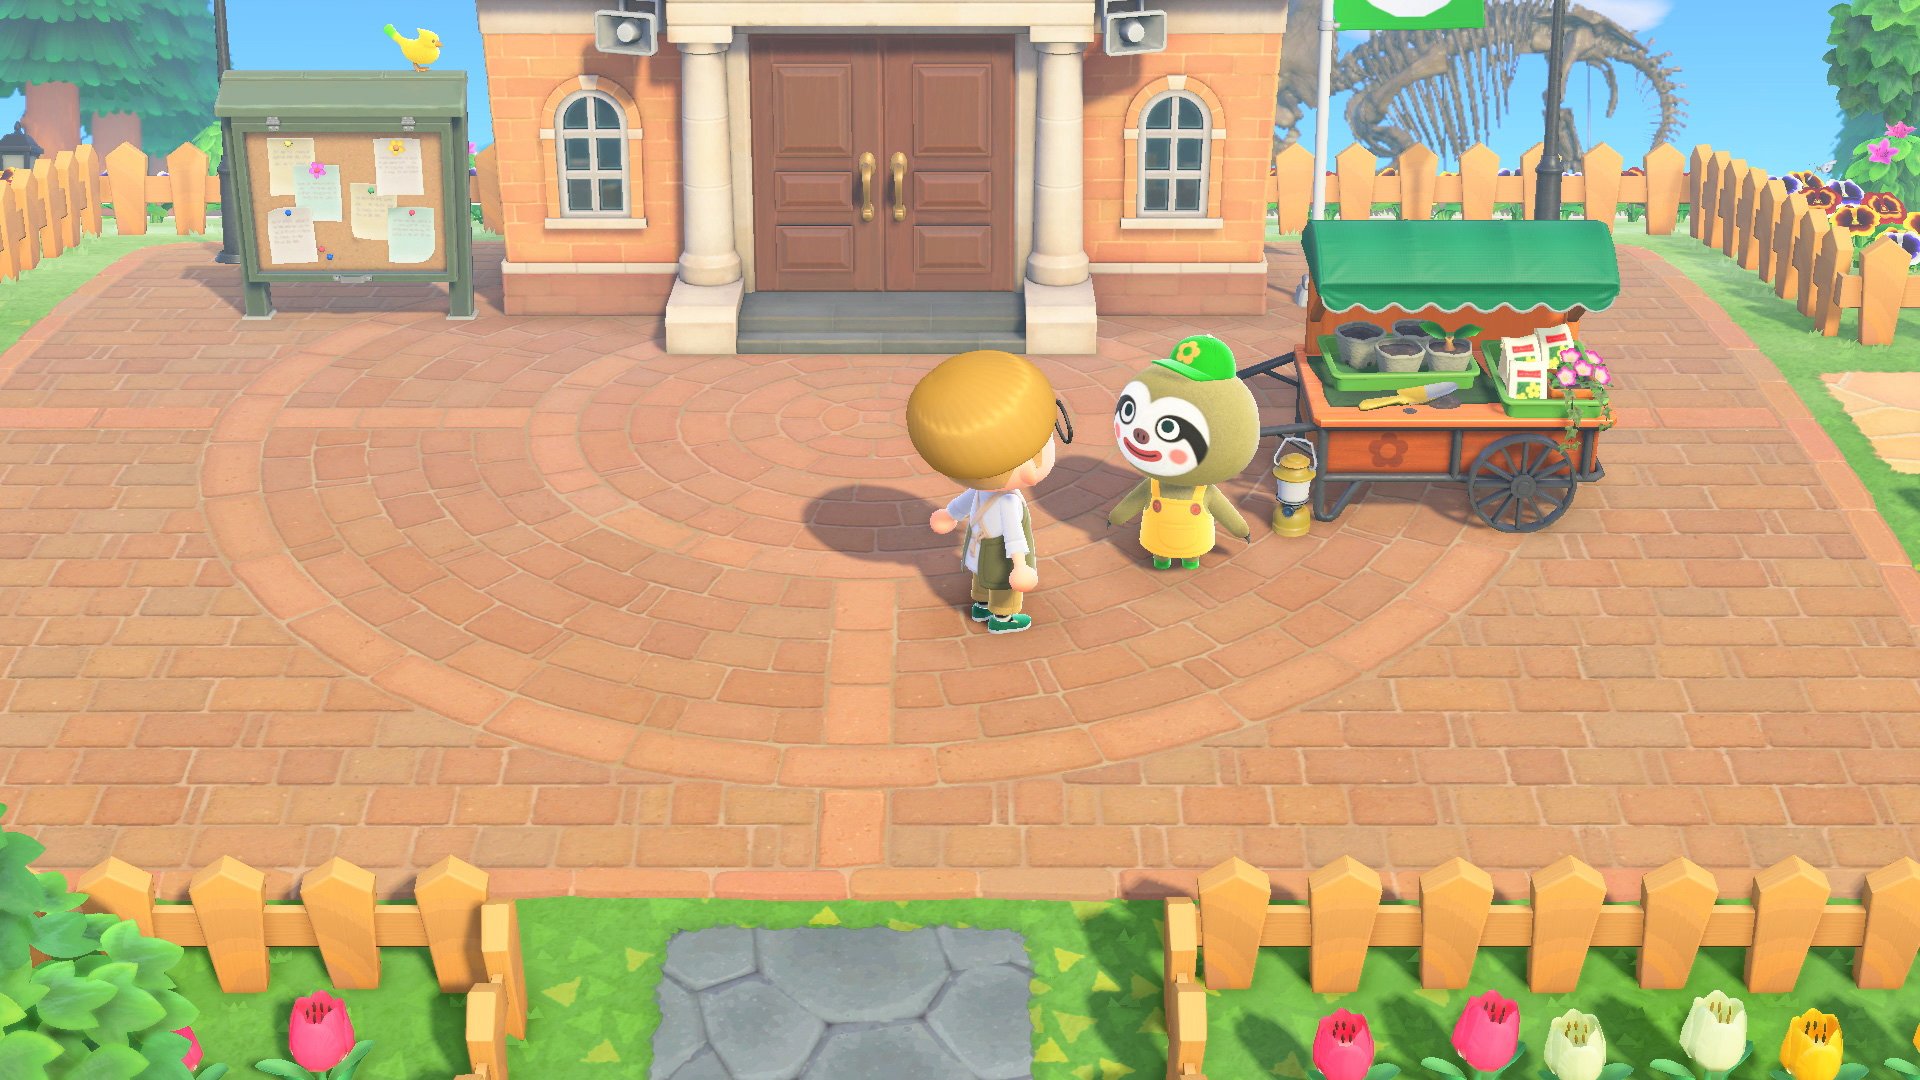 A screenshot from Animal Crossing: New Horizon